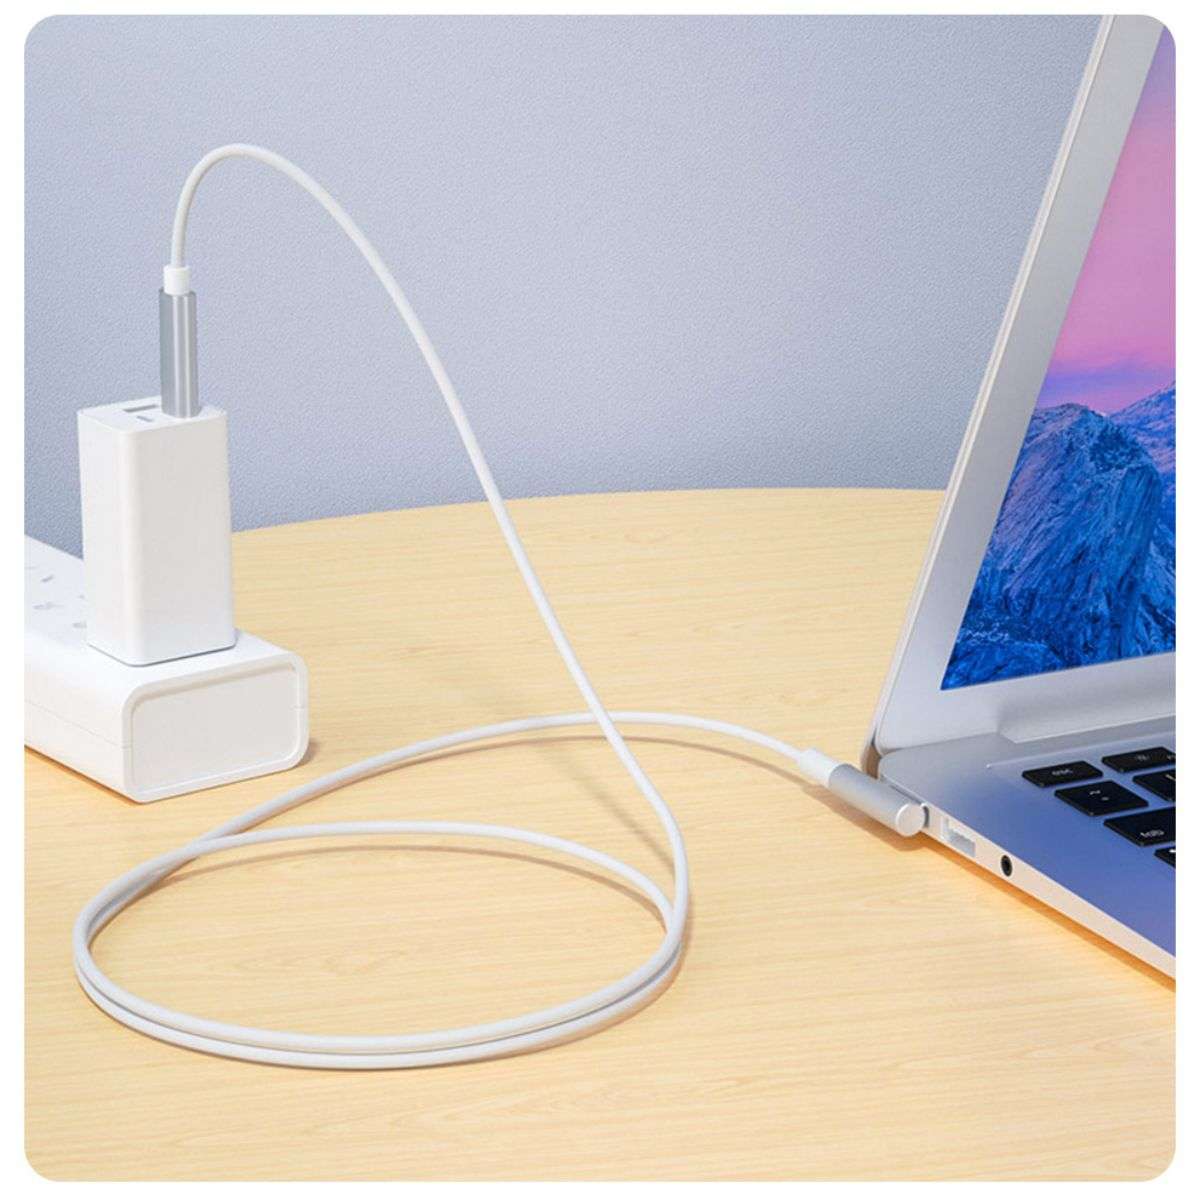 Coteci Macbook USB C to Magsafe 1 Cable 2M - Hugmie